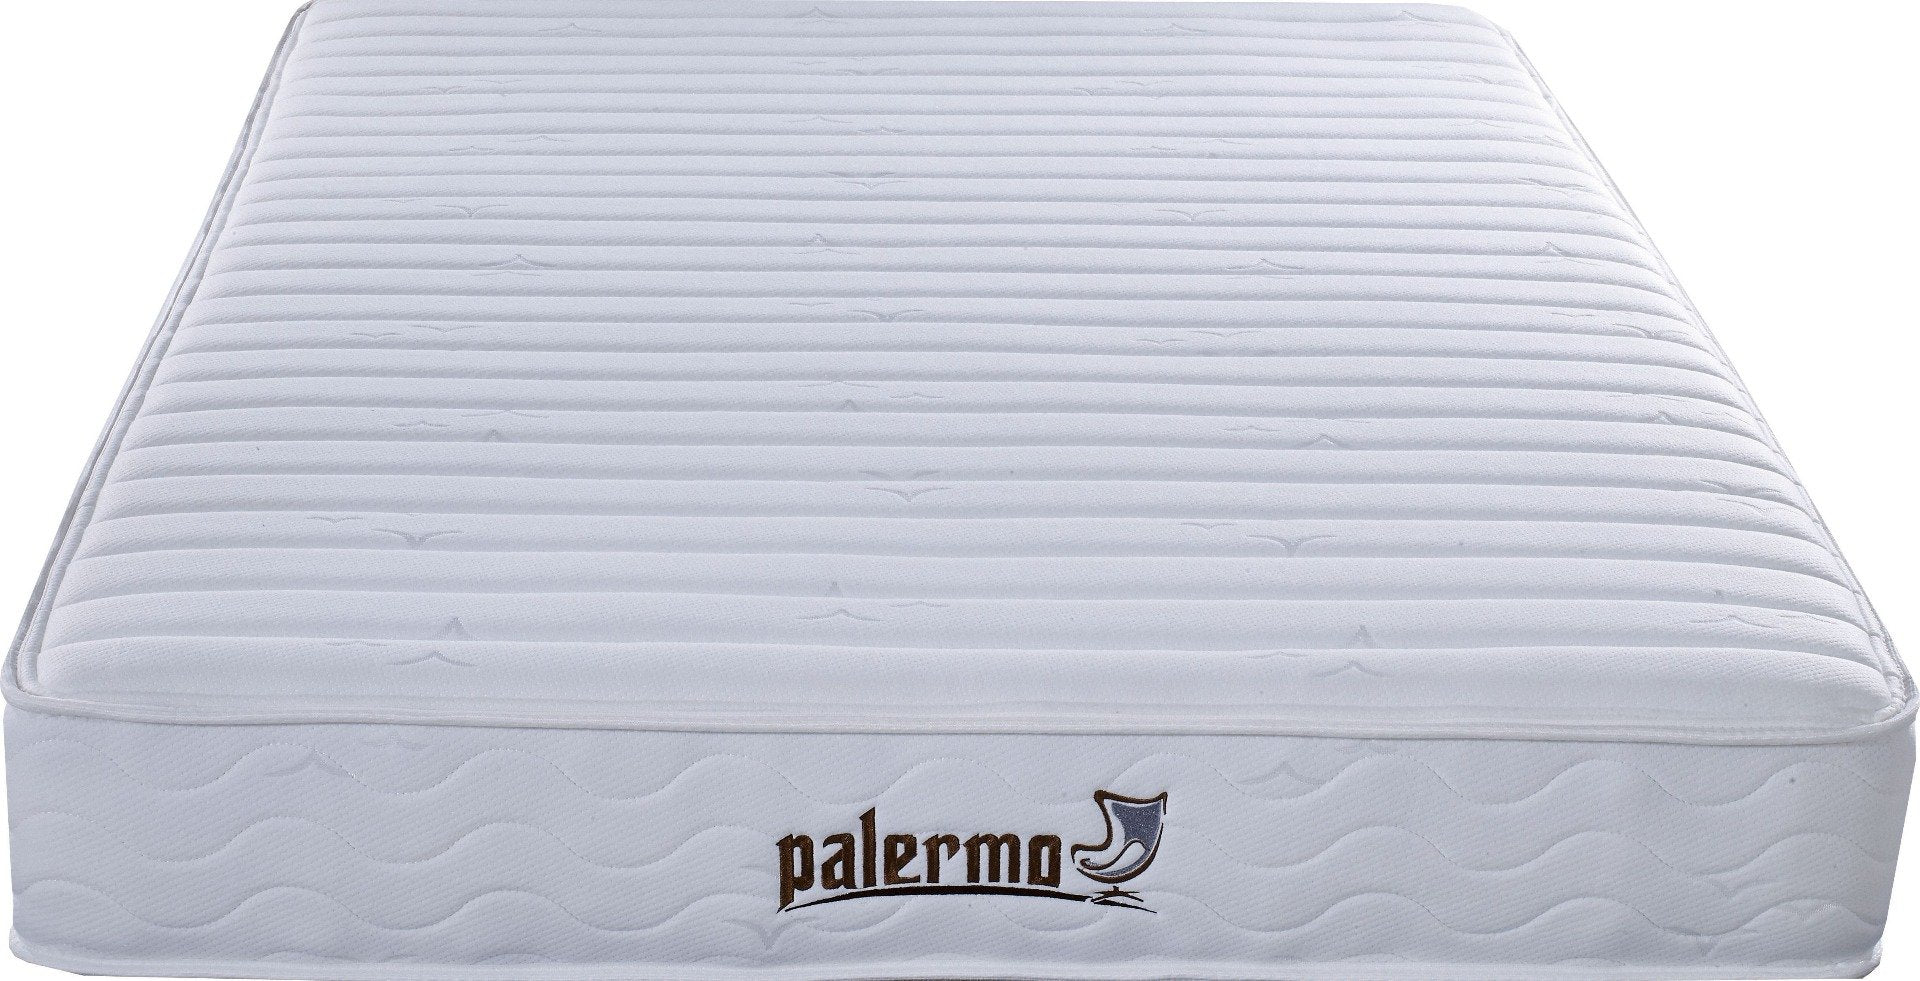 Furniture Palermo Contour 20cm Encased Coil Double Mattress CertiPUR-US Certified Foam